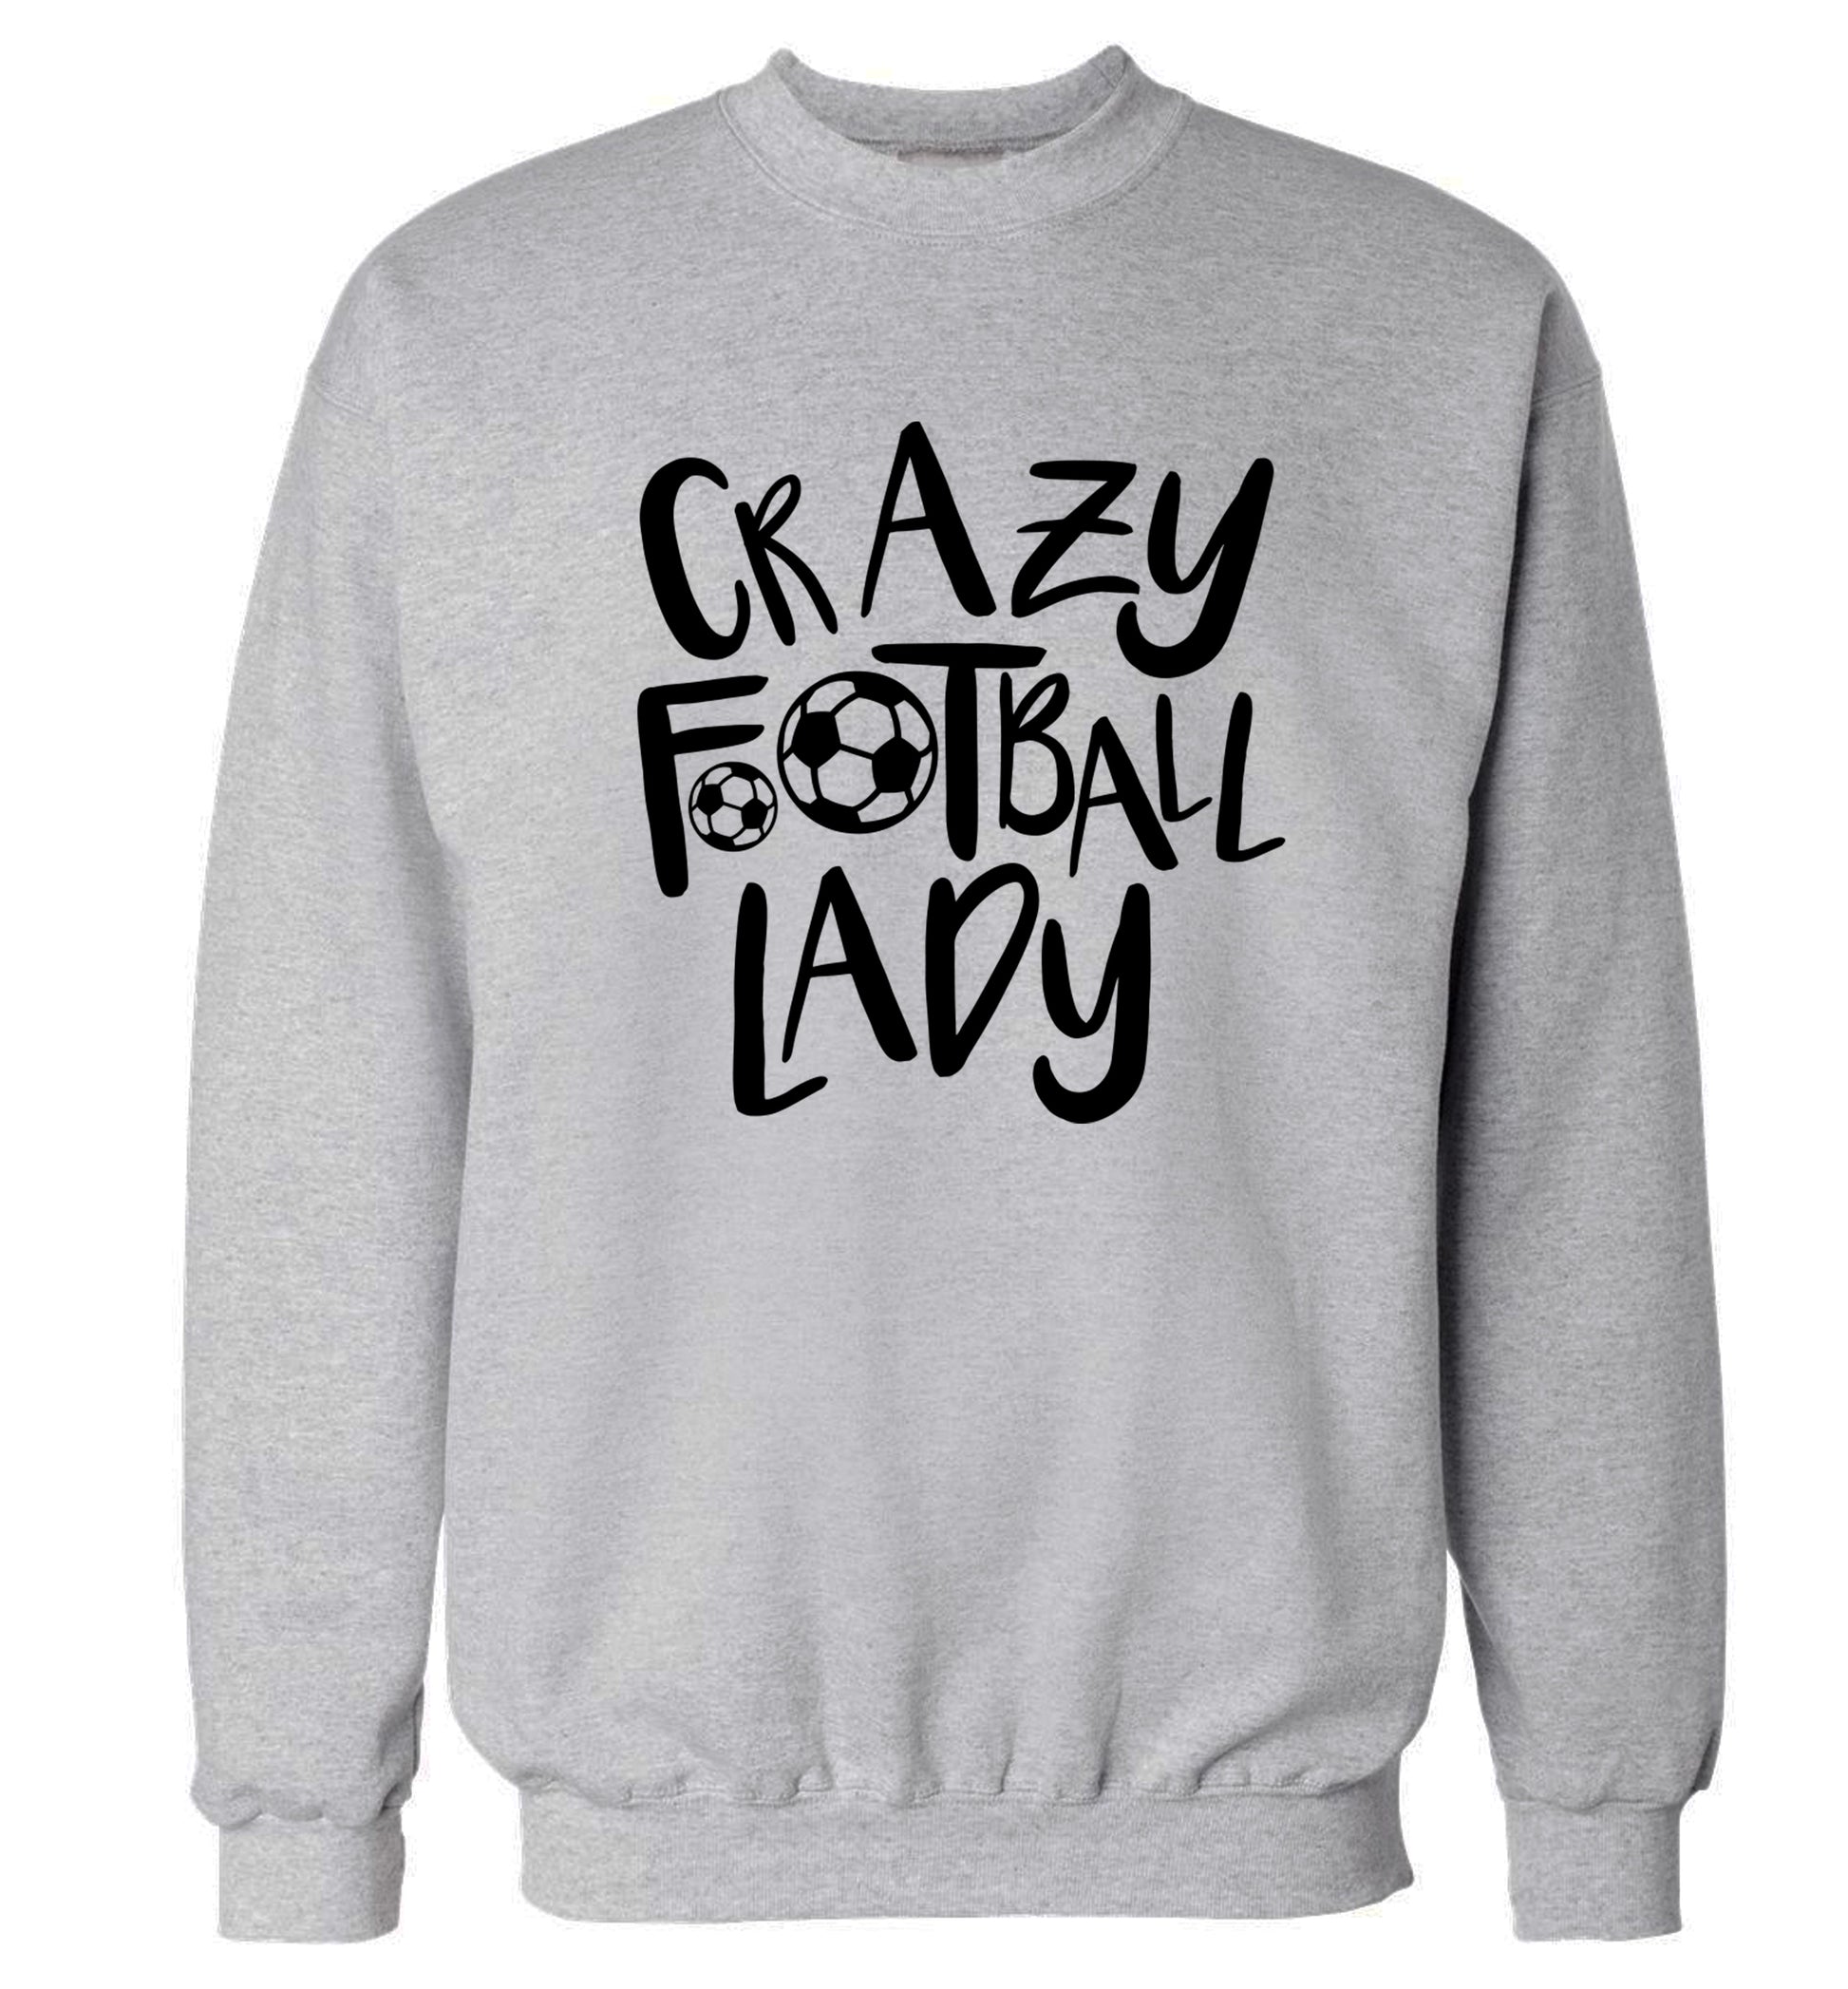 Crazy football lady Adult's unisexgrey Sweater 2XL